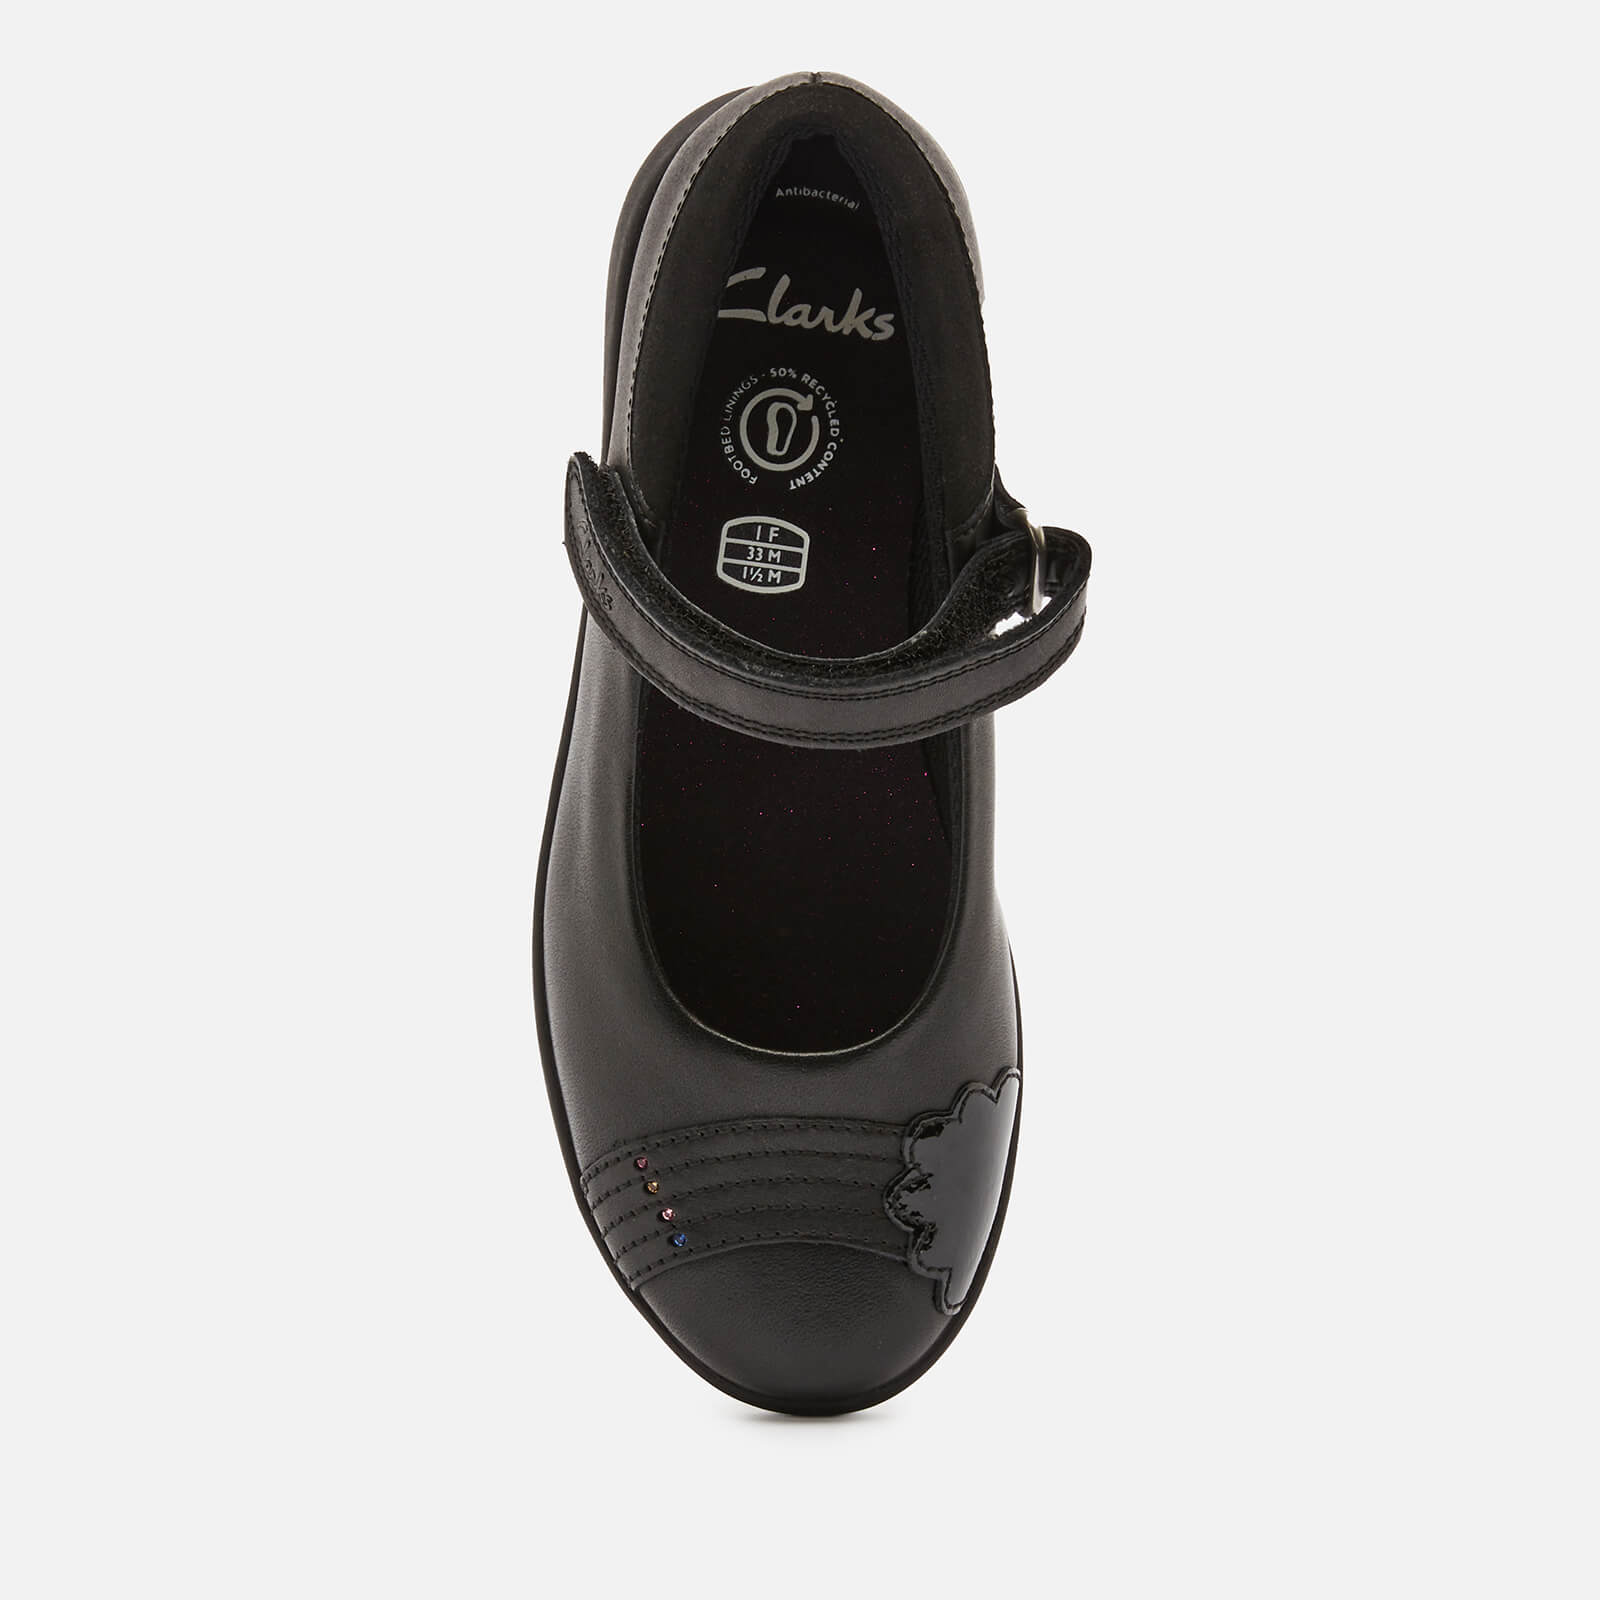 clarks etch beam kids' school shoes - black leather - uk 10 kids